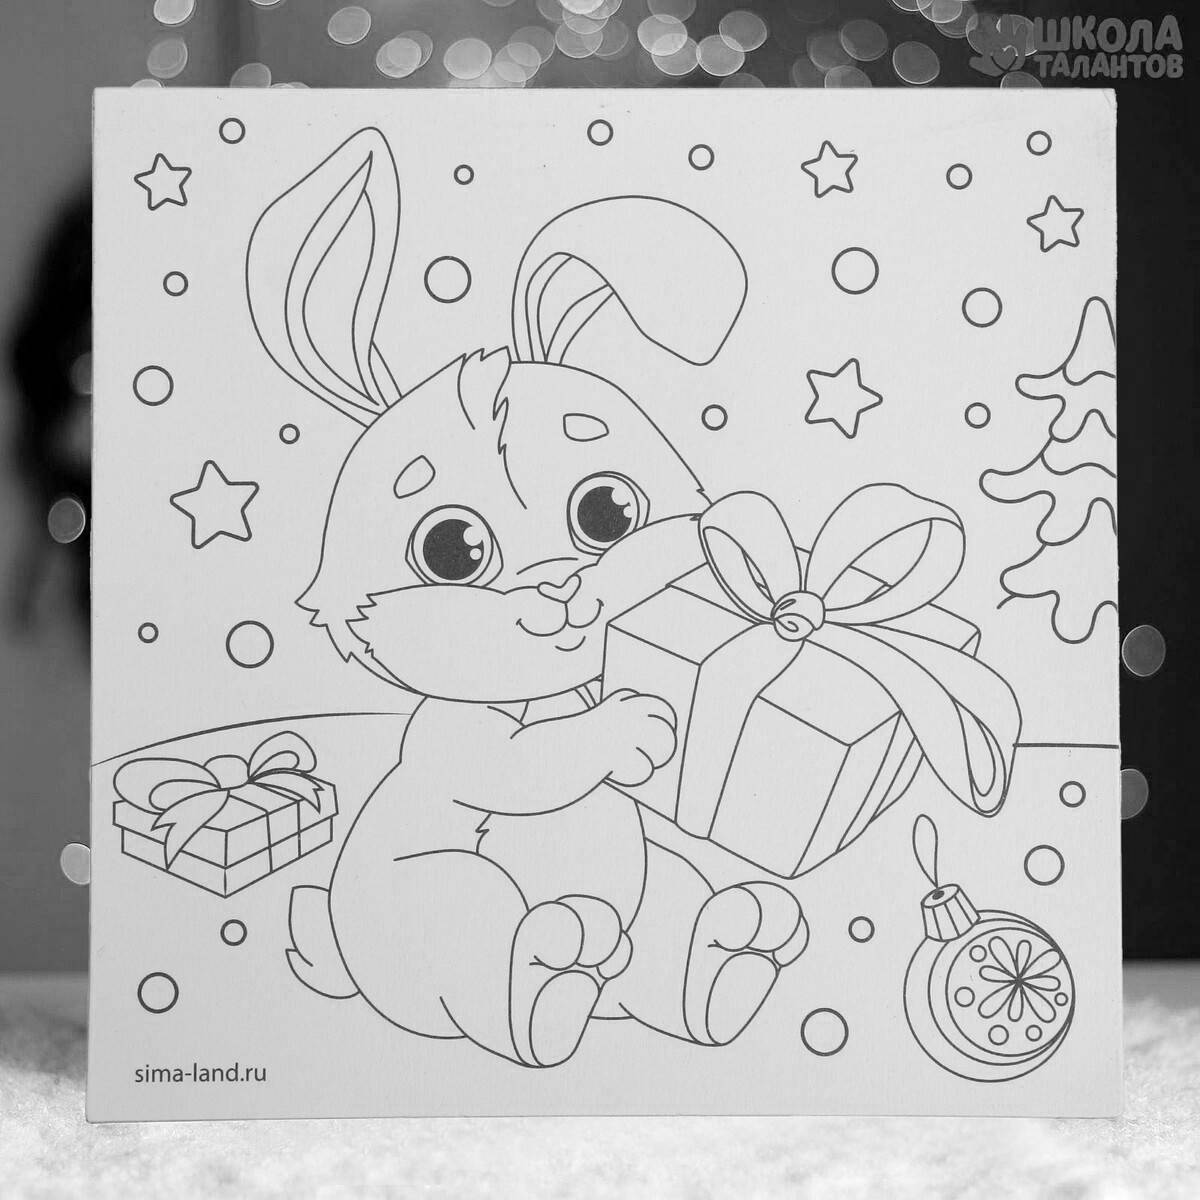 Joyful hare with a gift